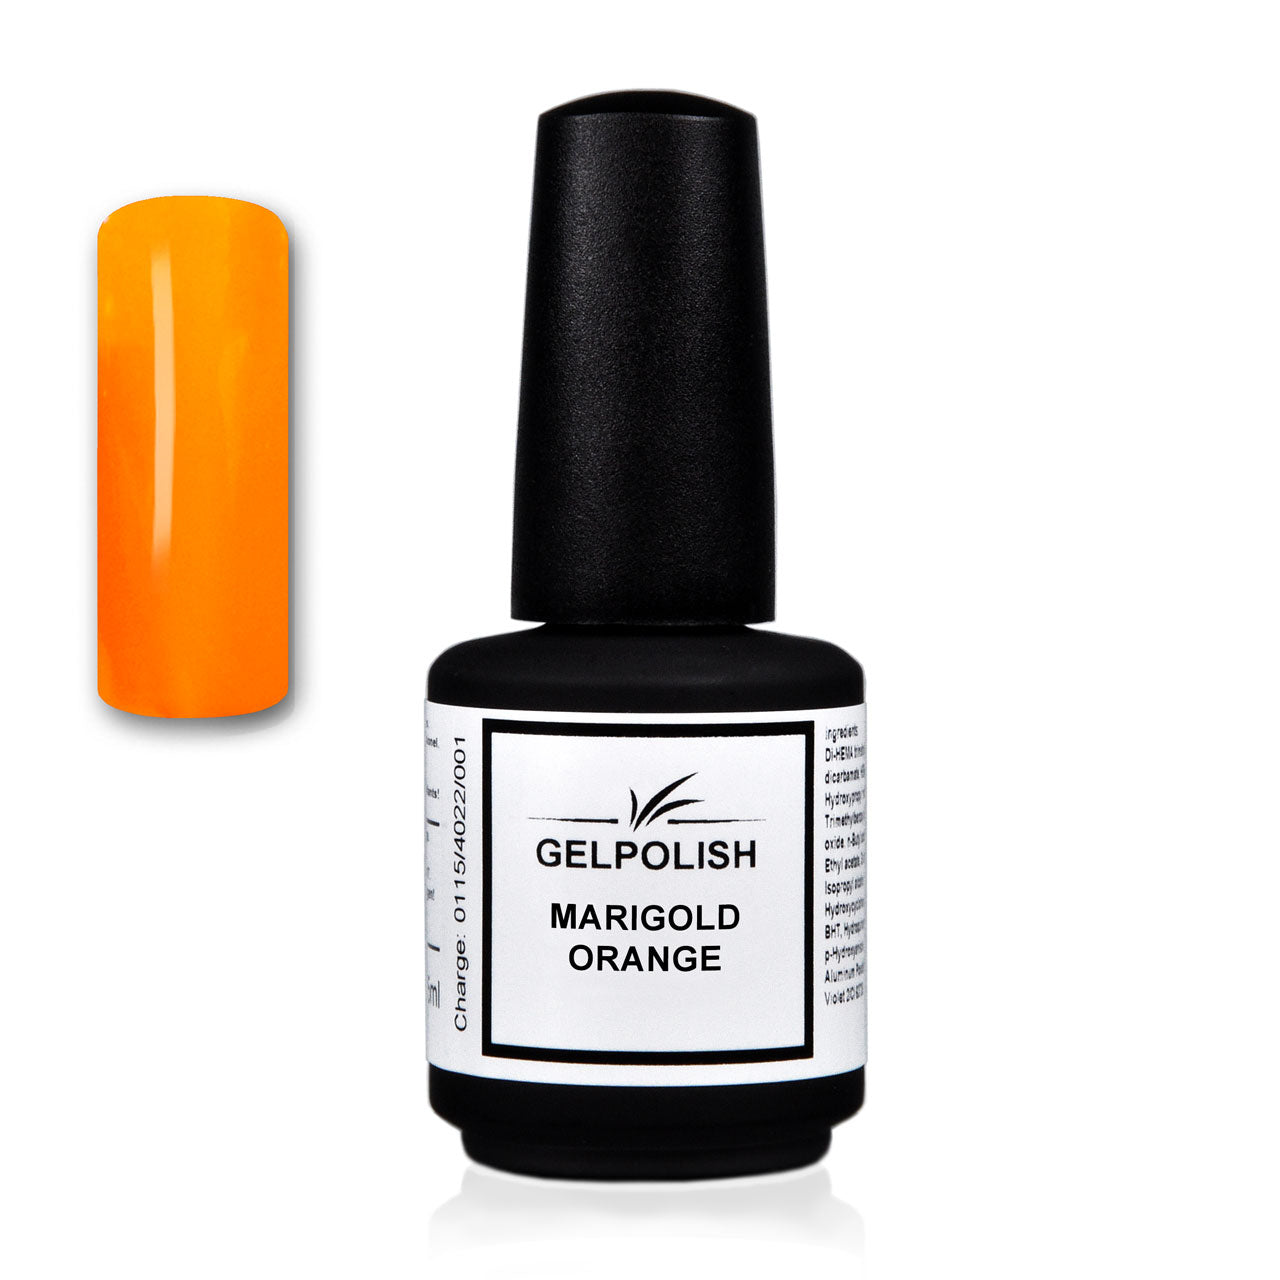 Gelpolish Marigold Orange